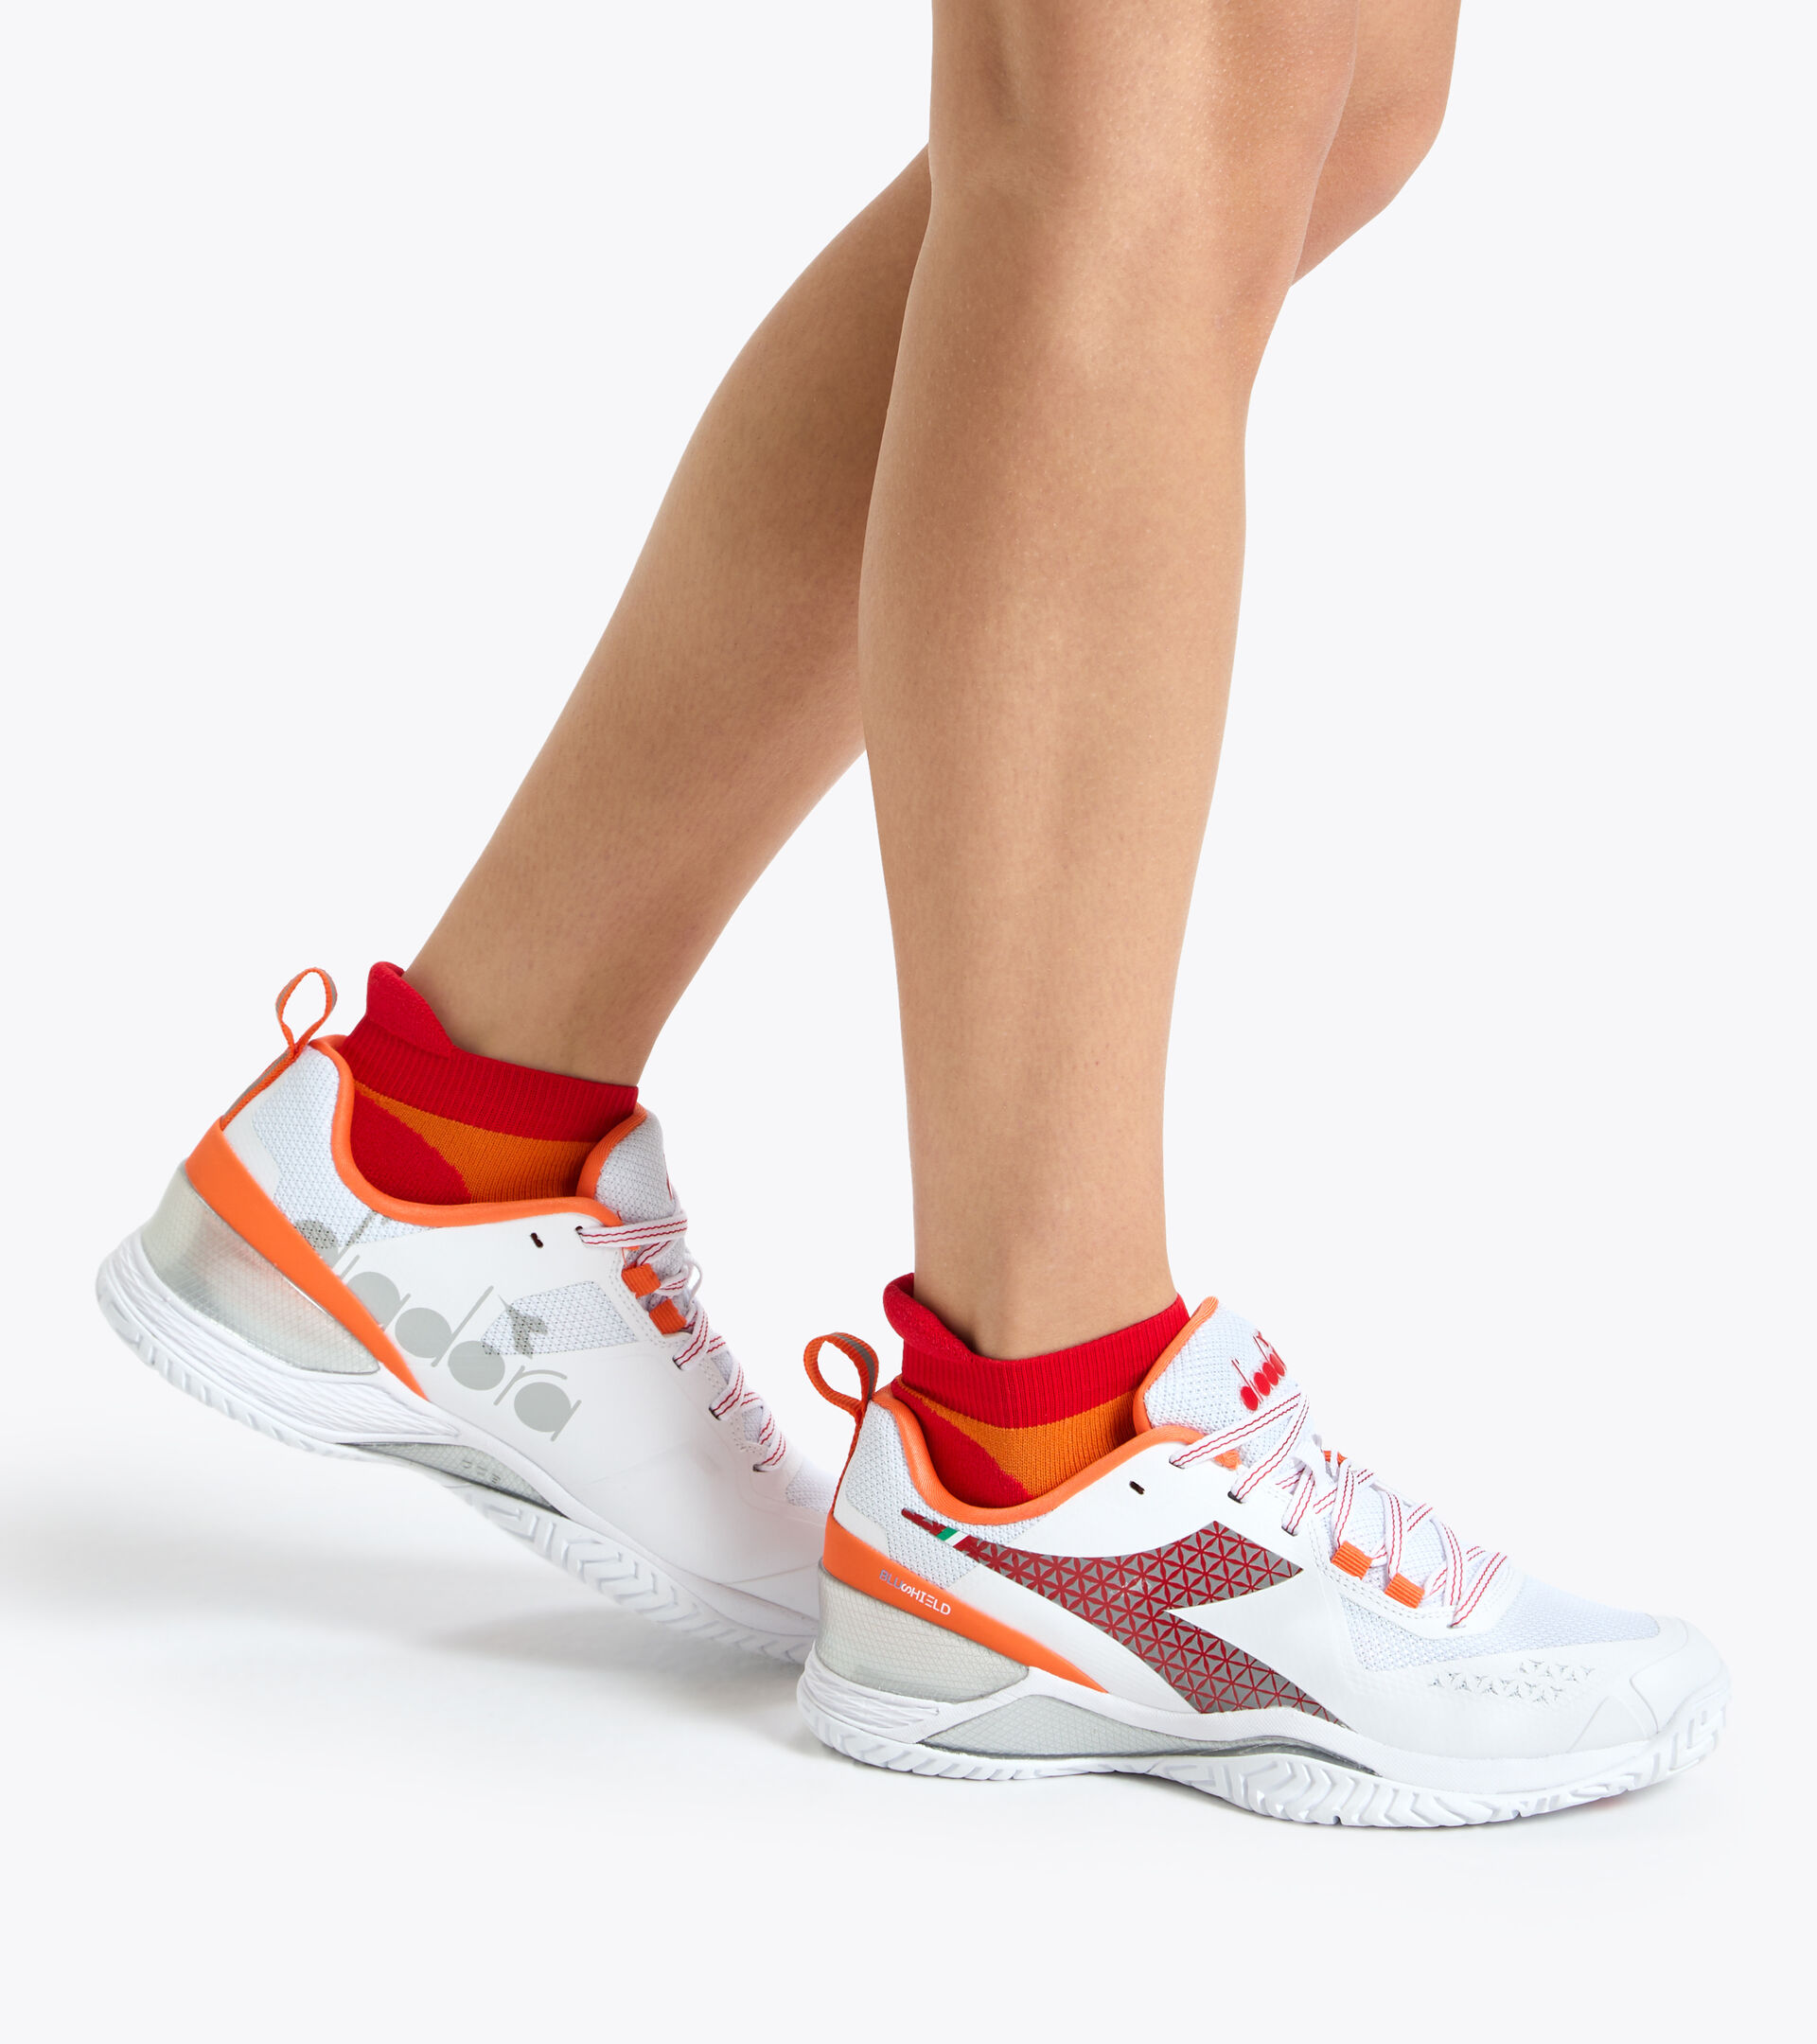 Diadora Blushield Torneo Ag Women's Tennis Shoes - Size 9